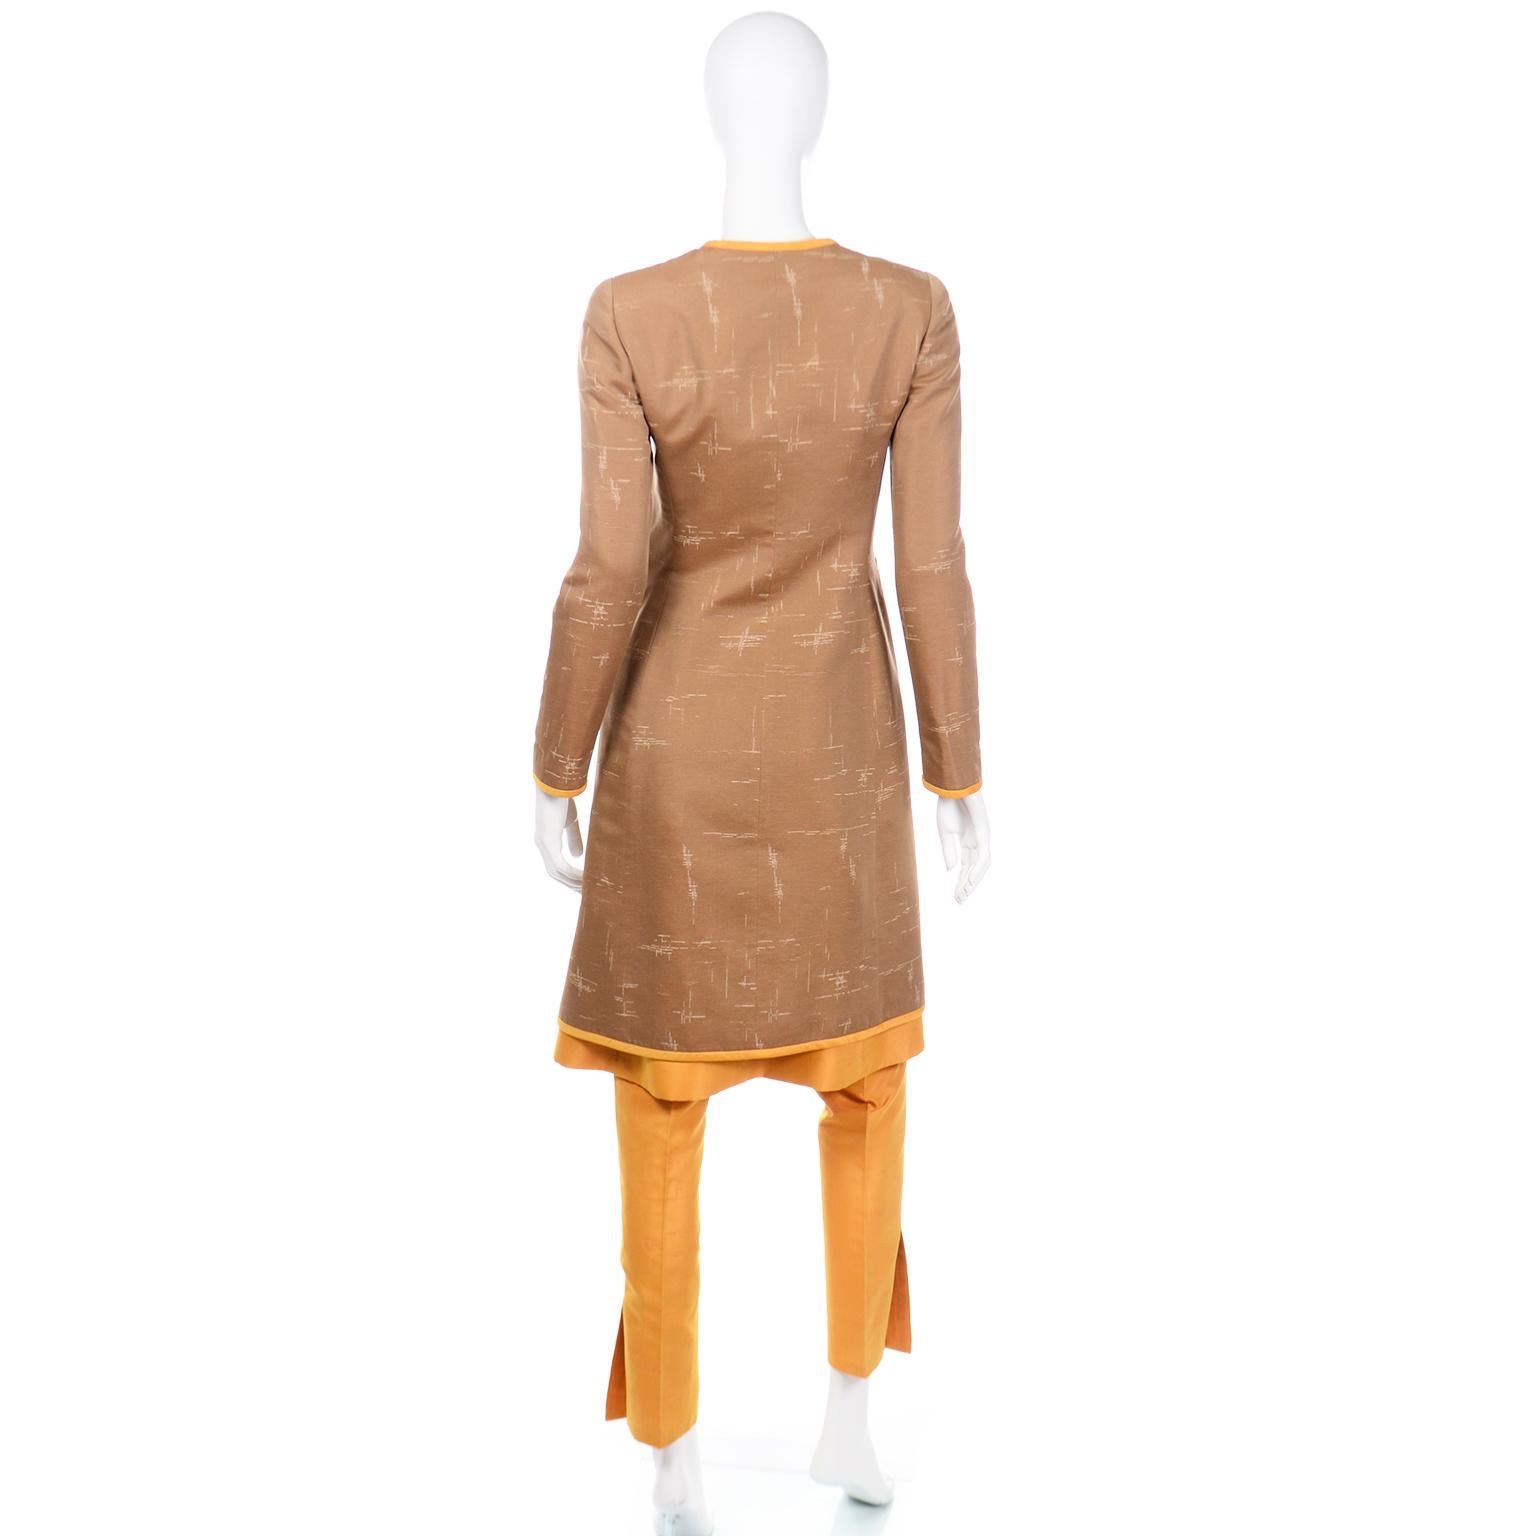 Women's Oscar de la Renta 1990s Vintage 1960s inspired Coat Pants and Dress Outfit For Sale